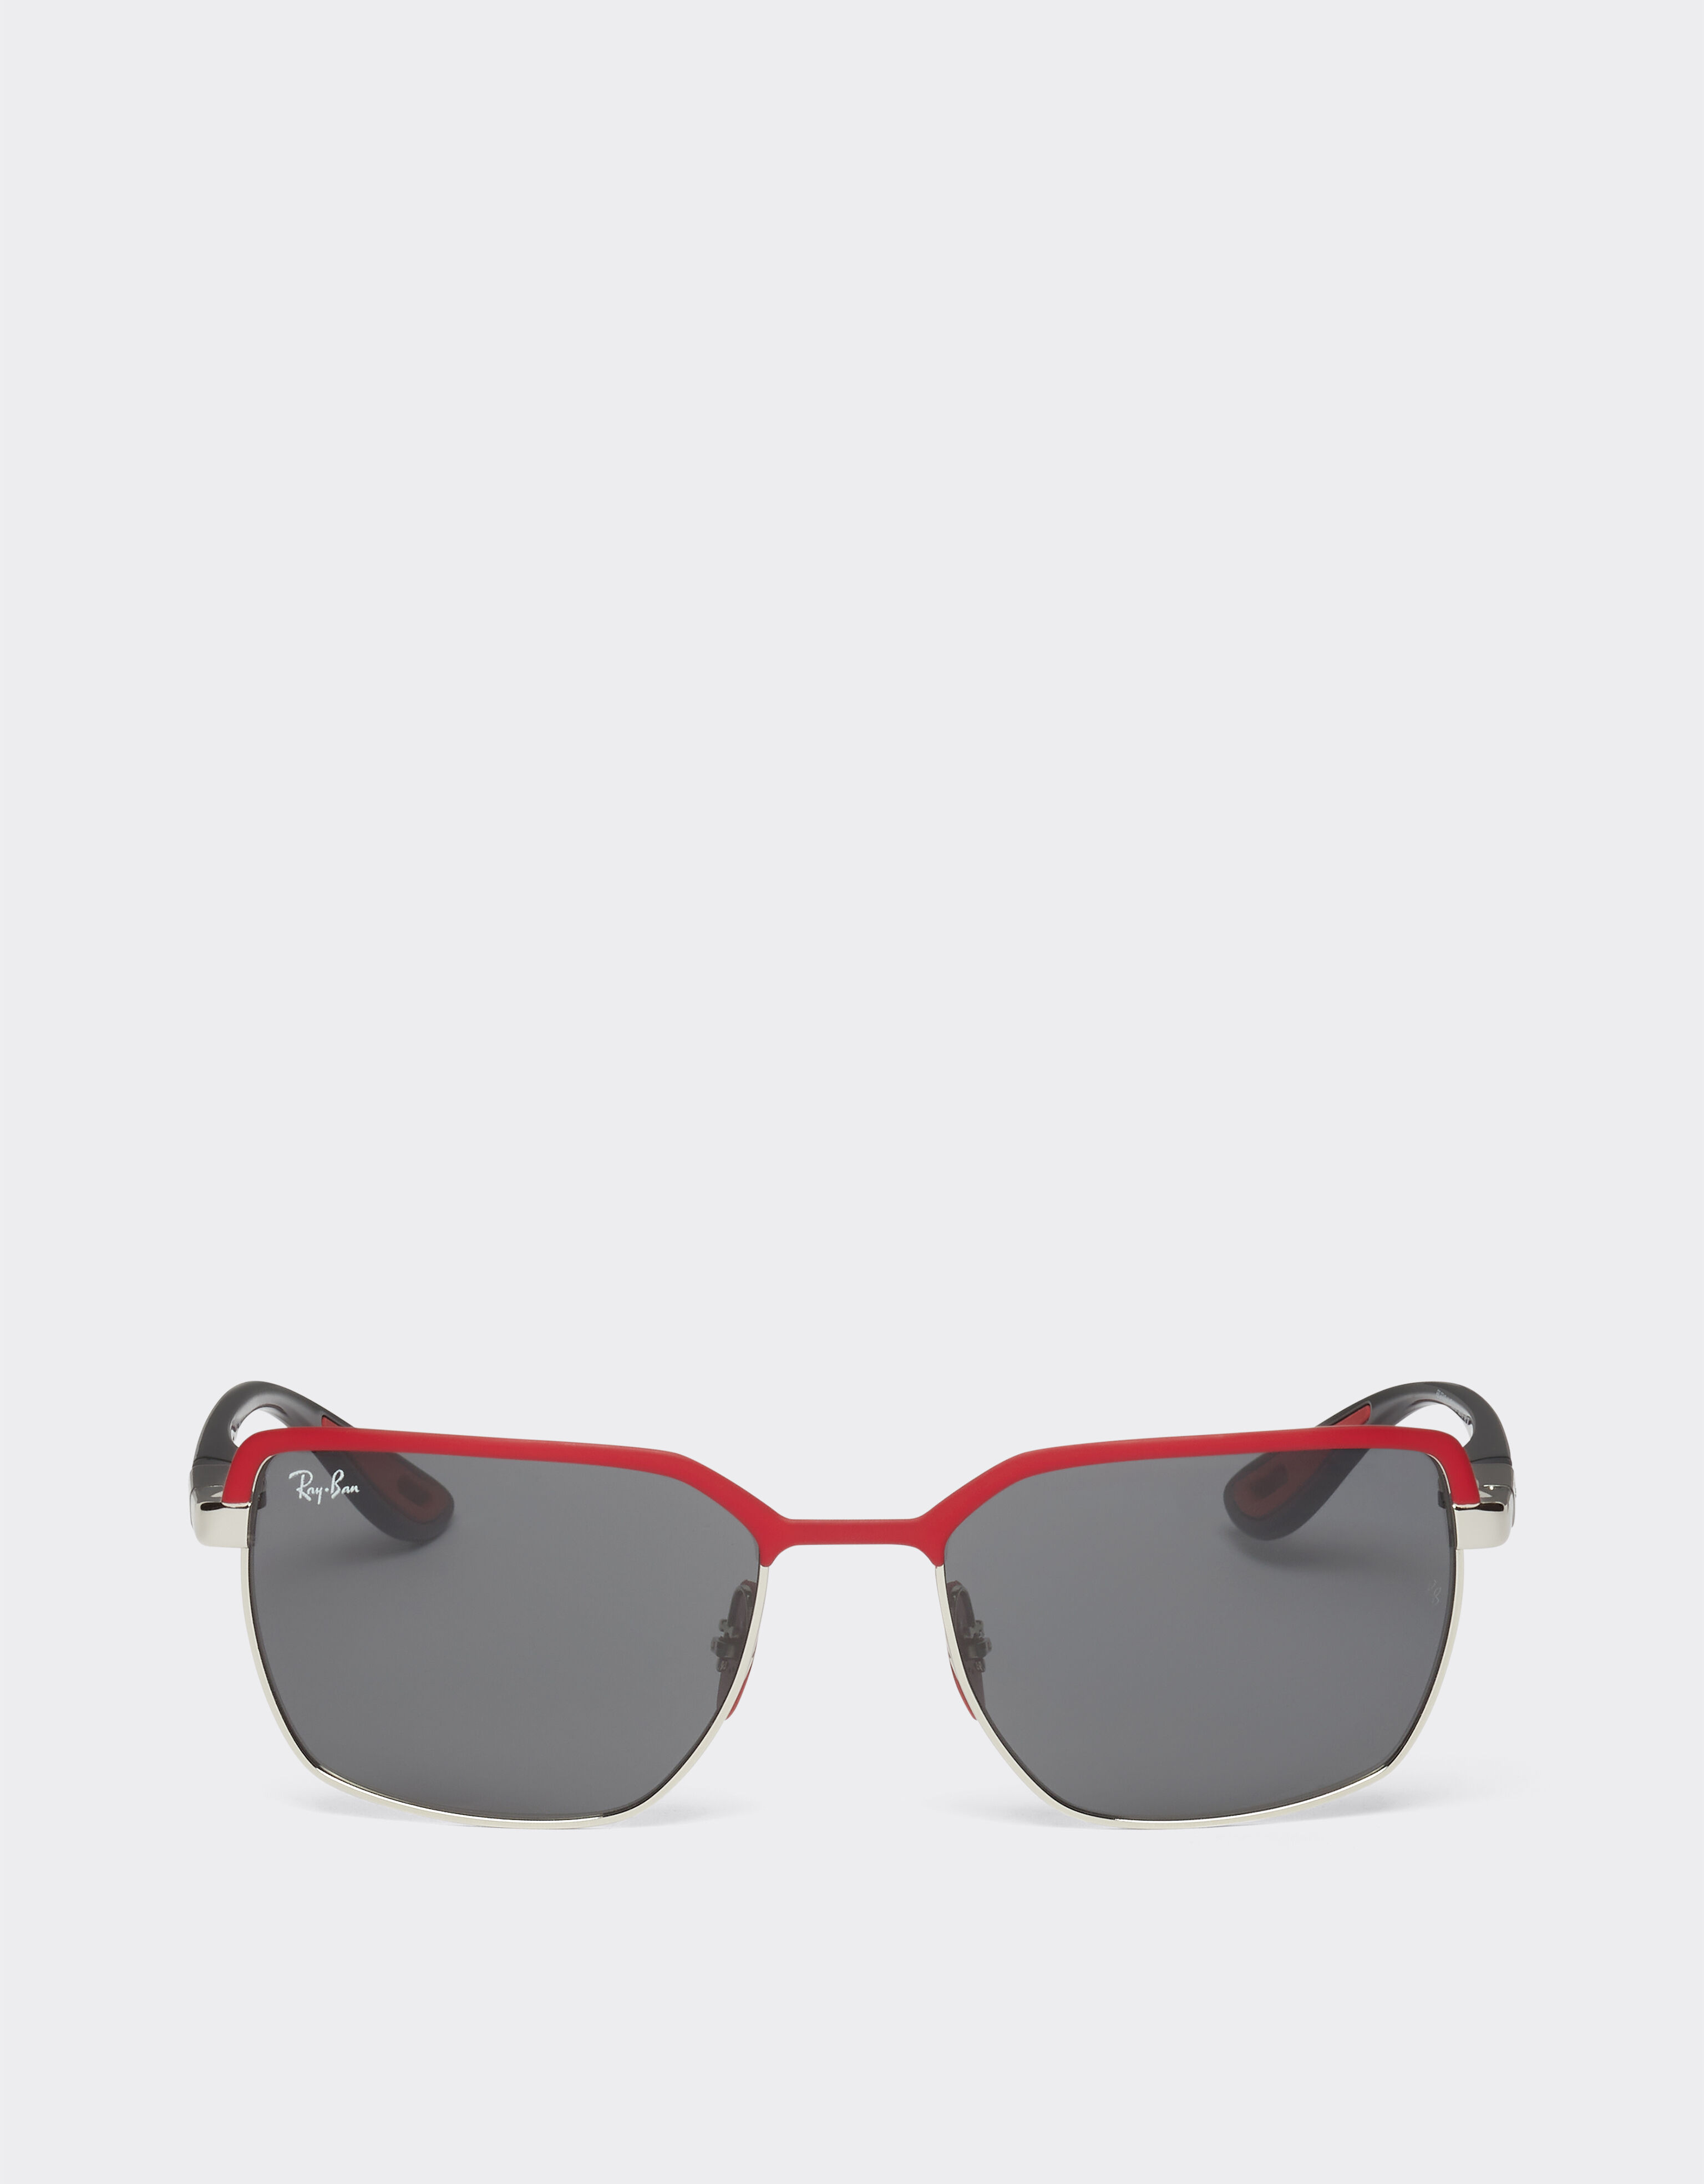 Ferrari Ray-Ban for Scuderia Ferrari 0RB3743M matt red and gunmetal grey metal sunglasses with grey lenses Black Matt F1257f